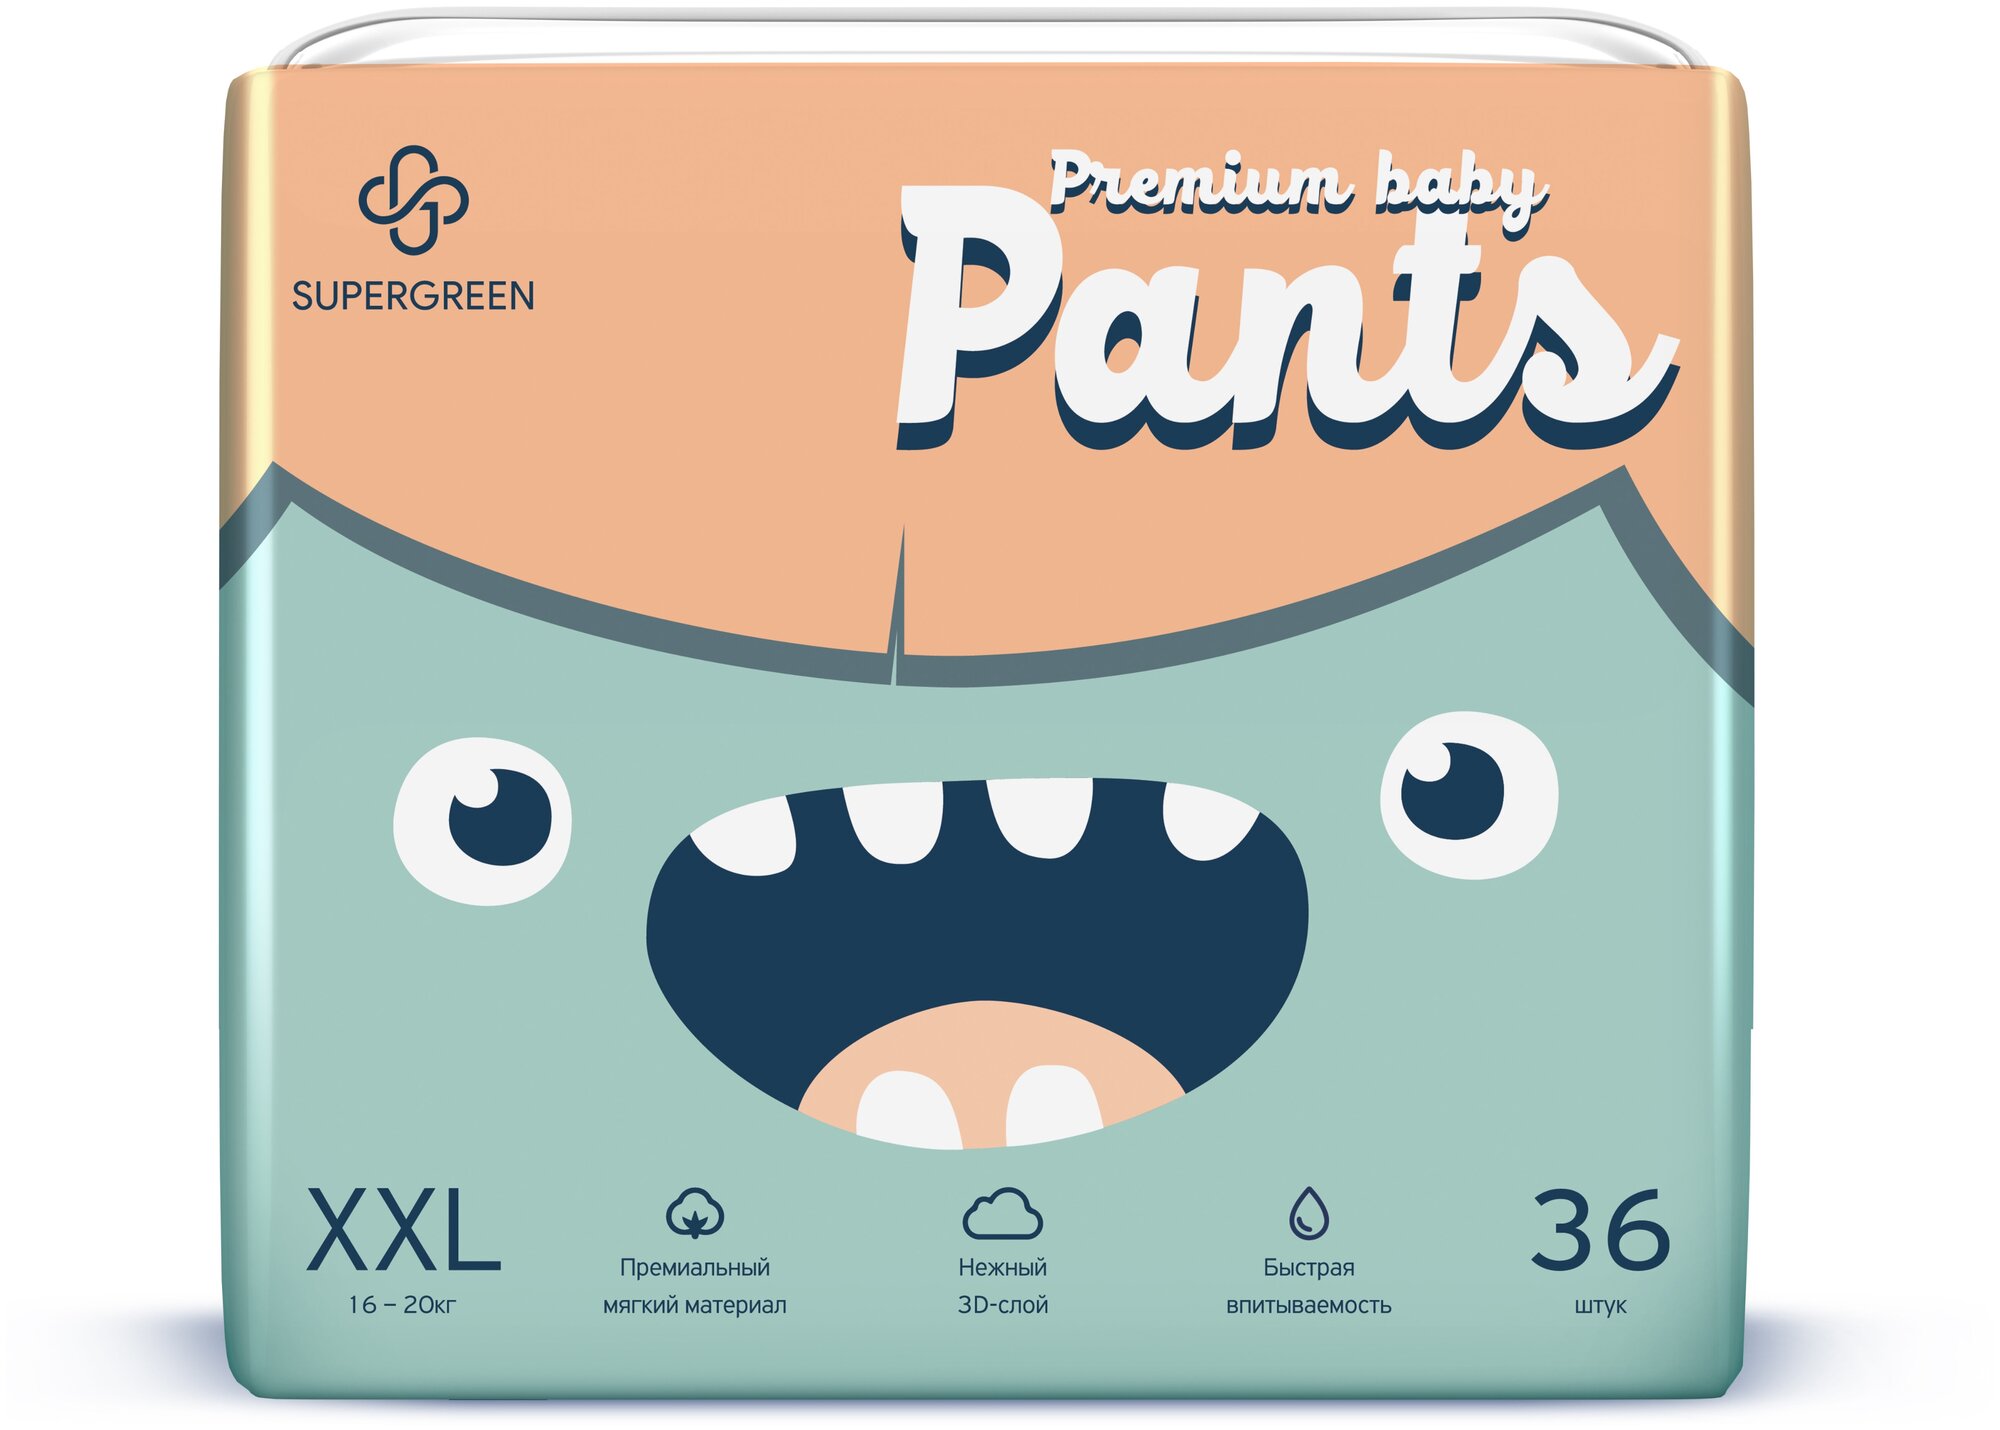 SUPERGREEN / Подгузники-трусики для детей SUPERGREEN Premium baby Pants, размер XXL (16-20 кг) 36 шт.